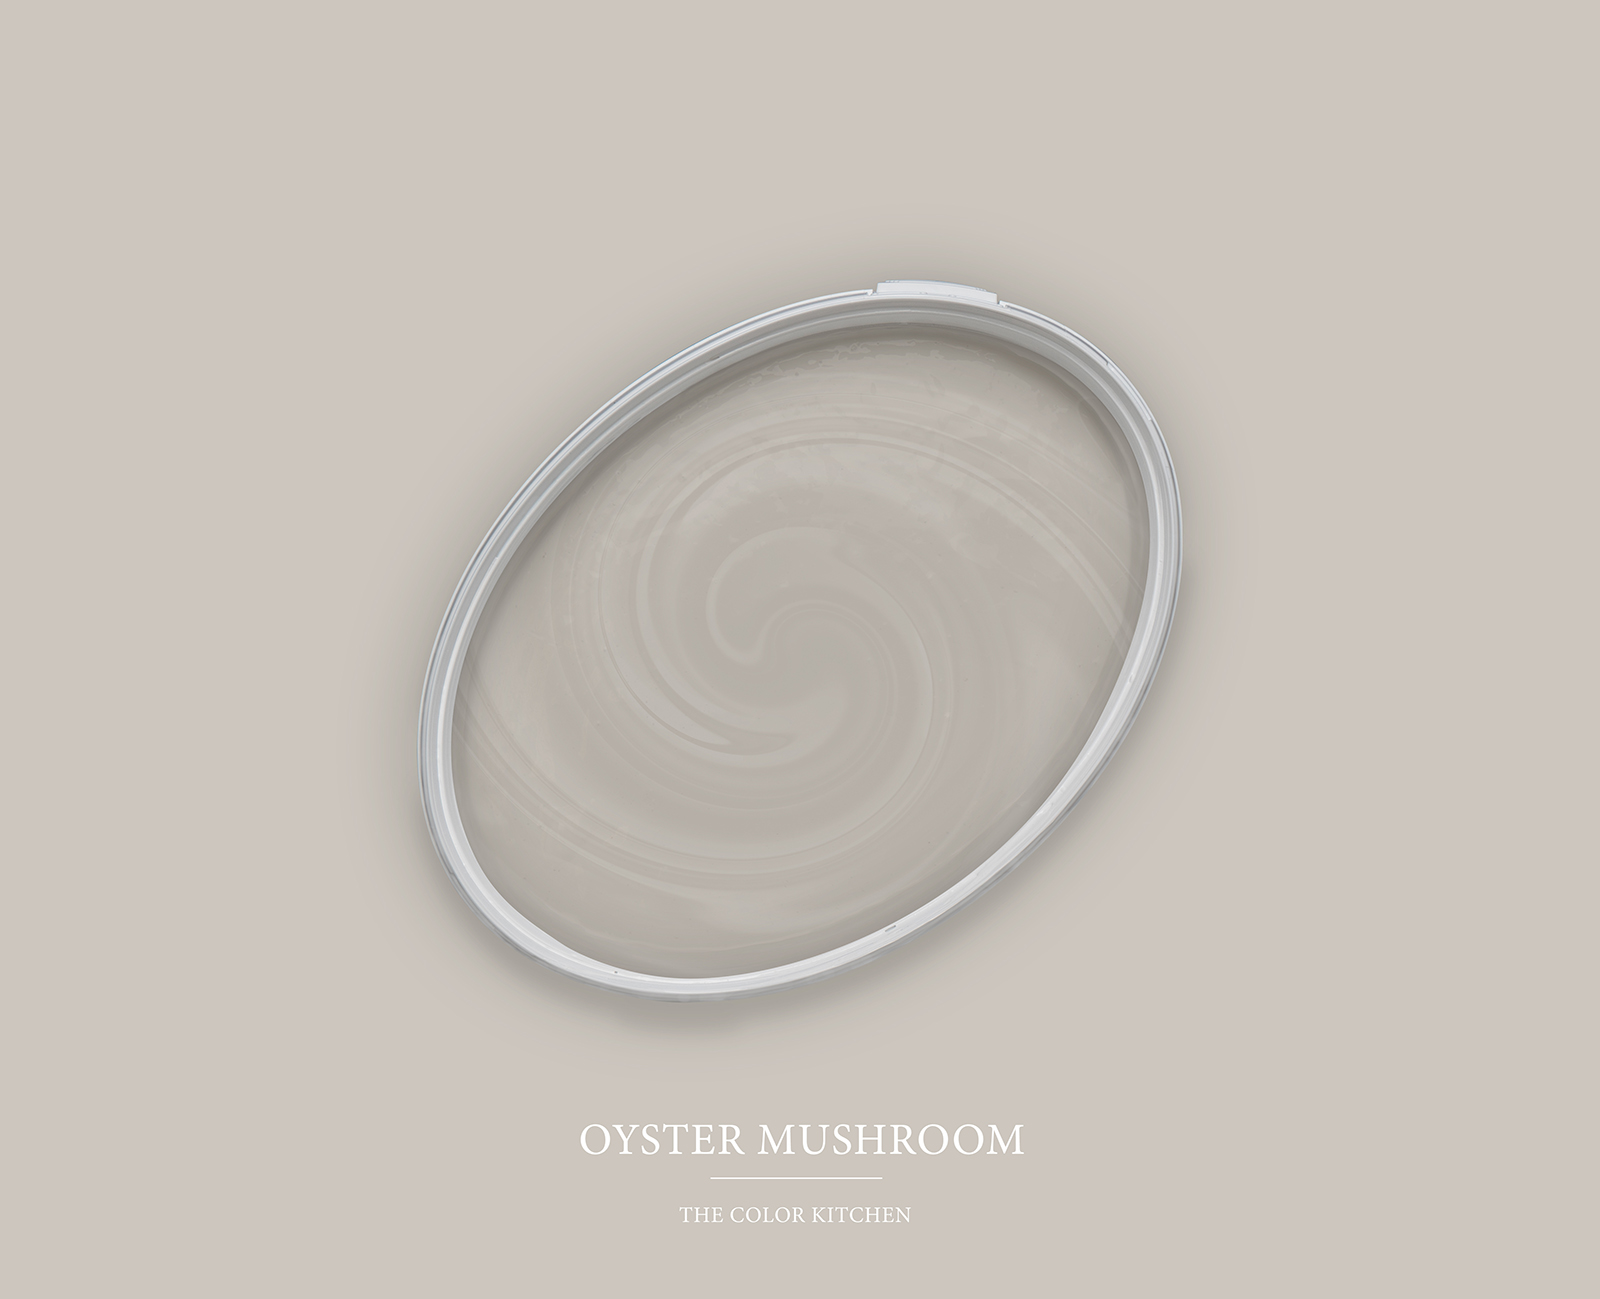 Muurverf TCK1017 »Oyster Mushroom« in licht taupe – 5,0 liter
